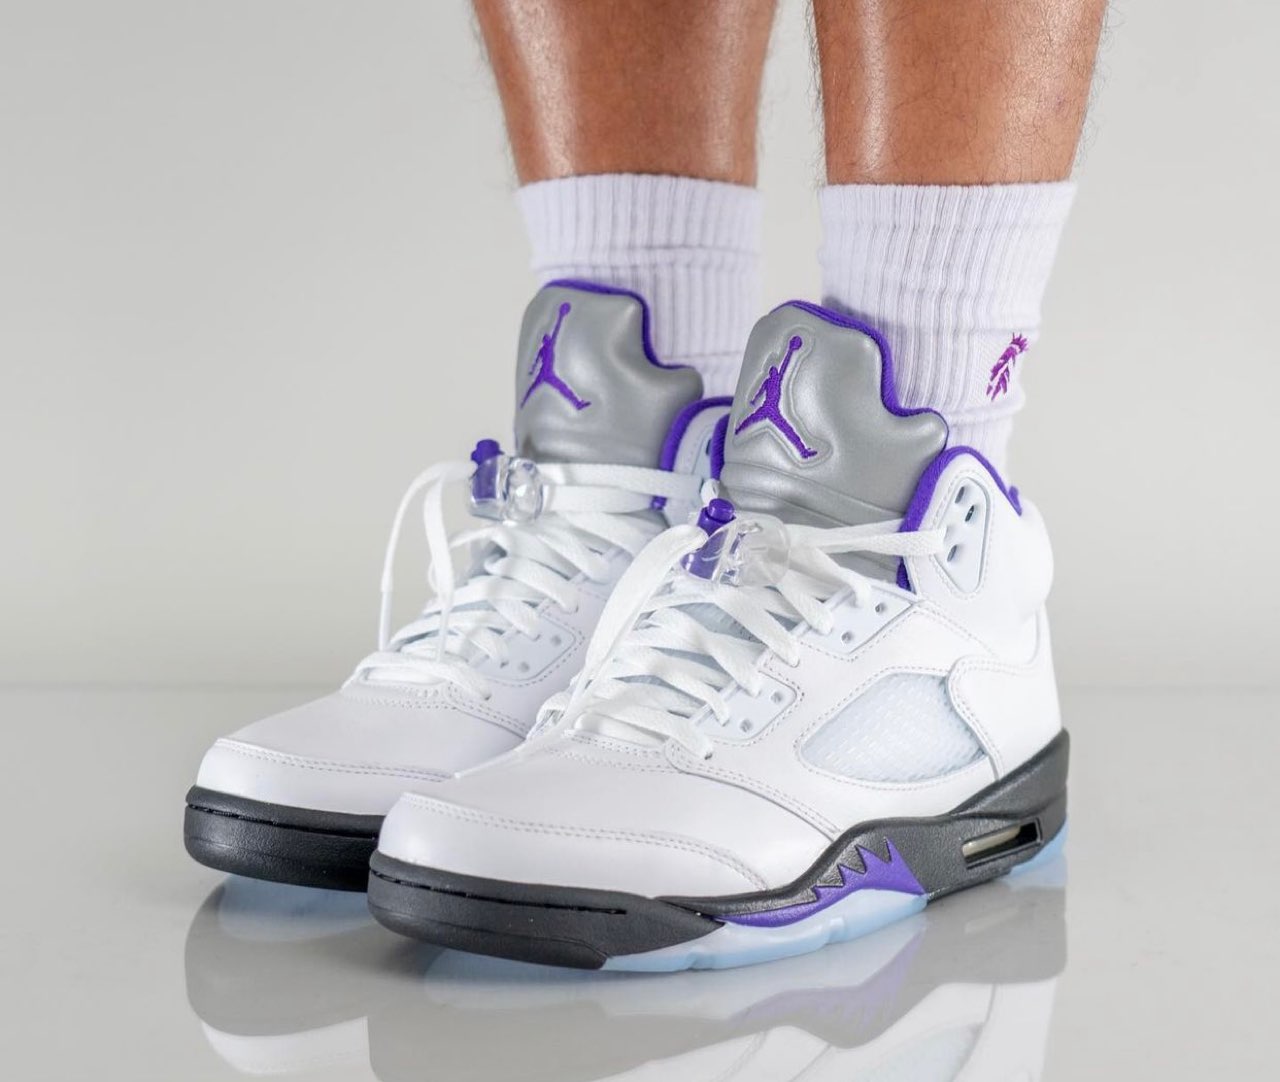 Nike】Air Jordan 5 Retro “Dark Concord”が国内8月16日に発売予定